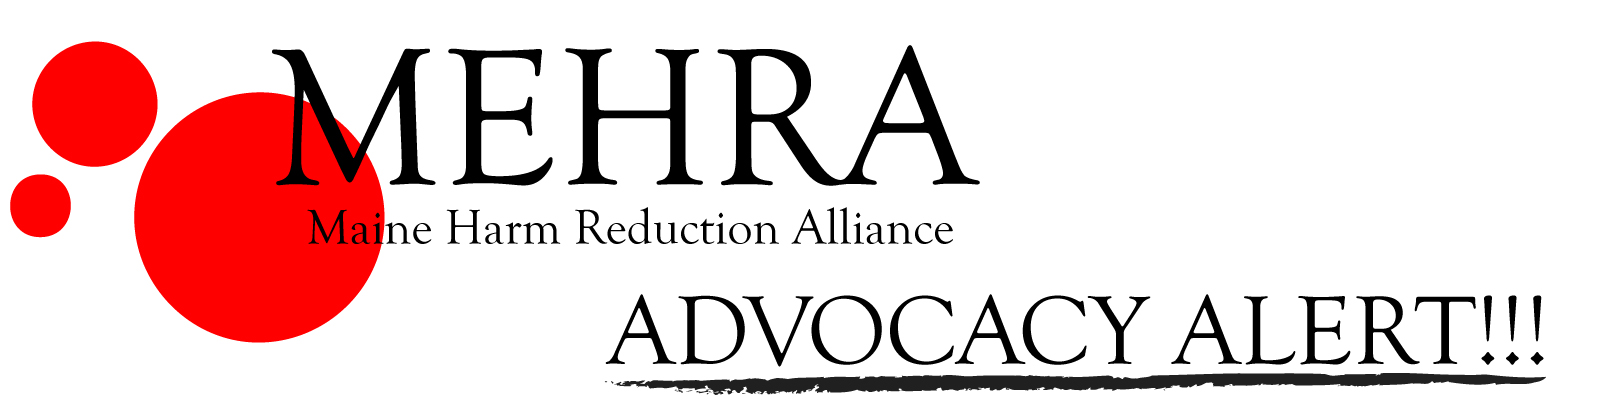 MEHRA-Advocacy Alert